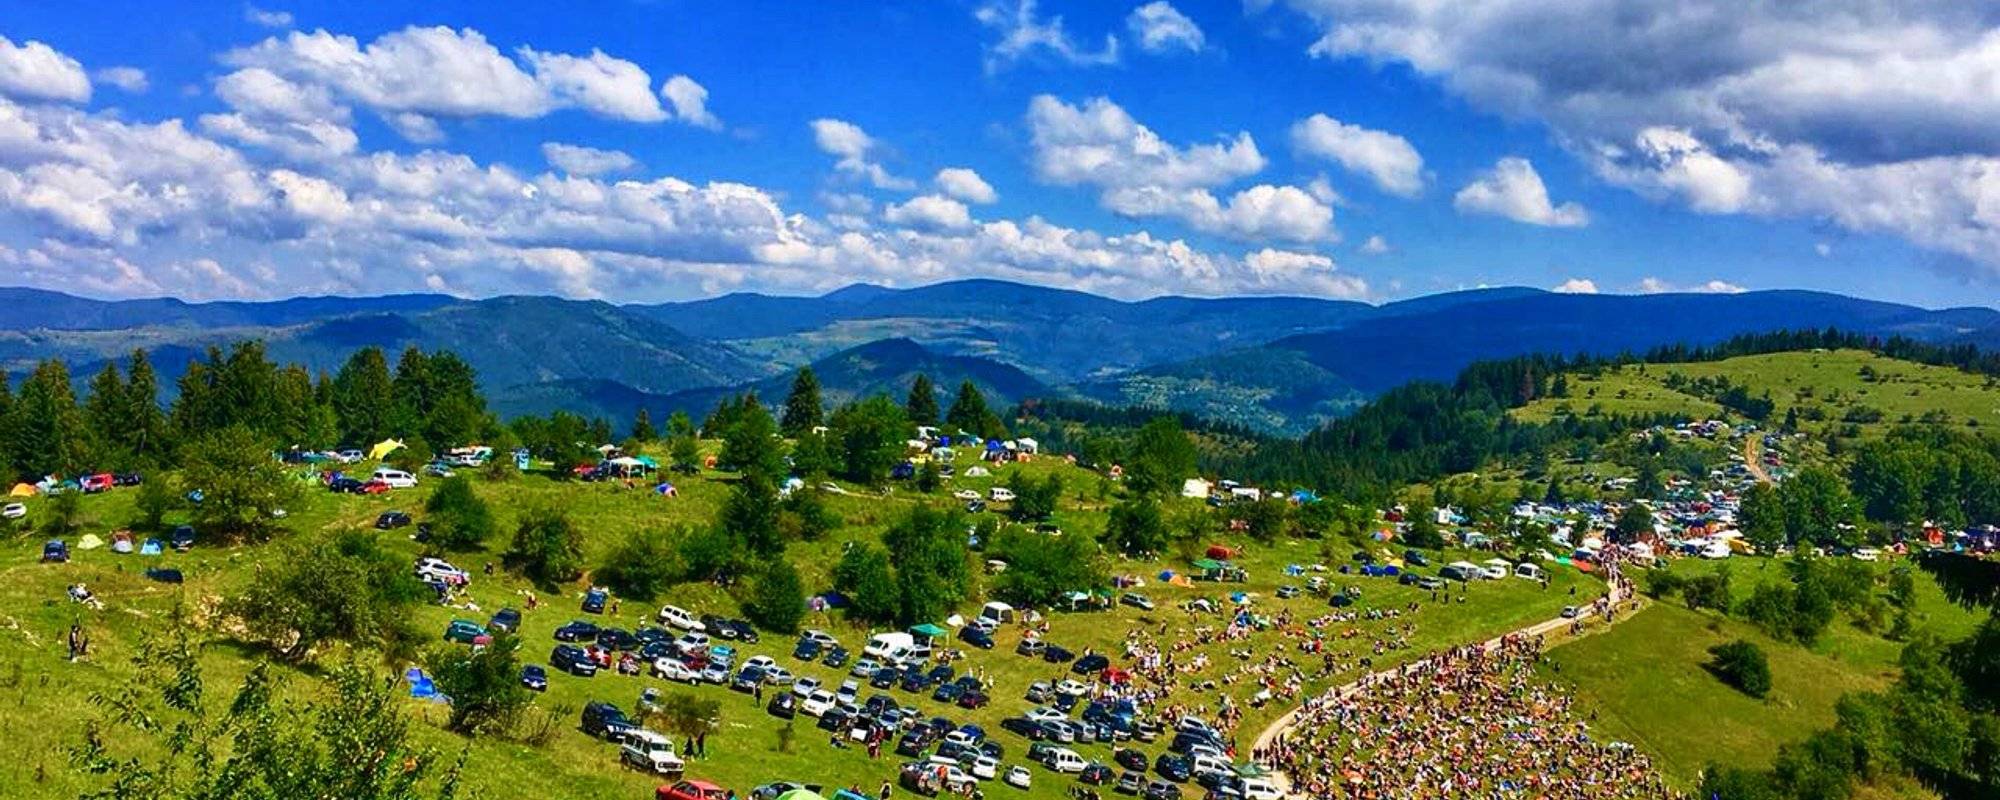 Rhodope Mountains and a Kaba Gaida Festival